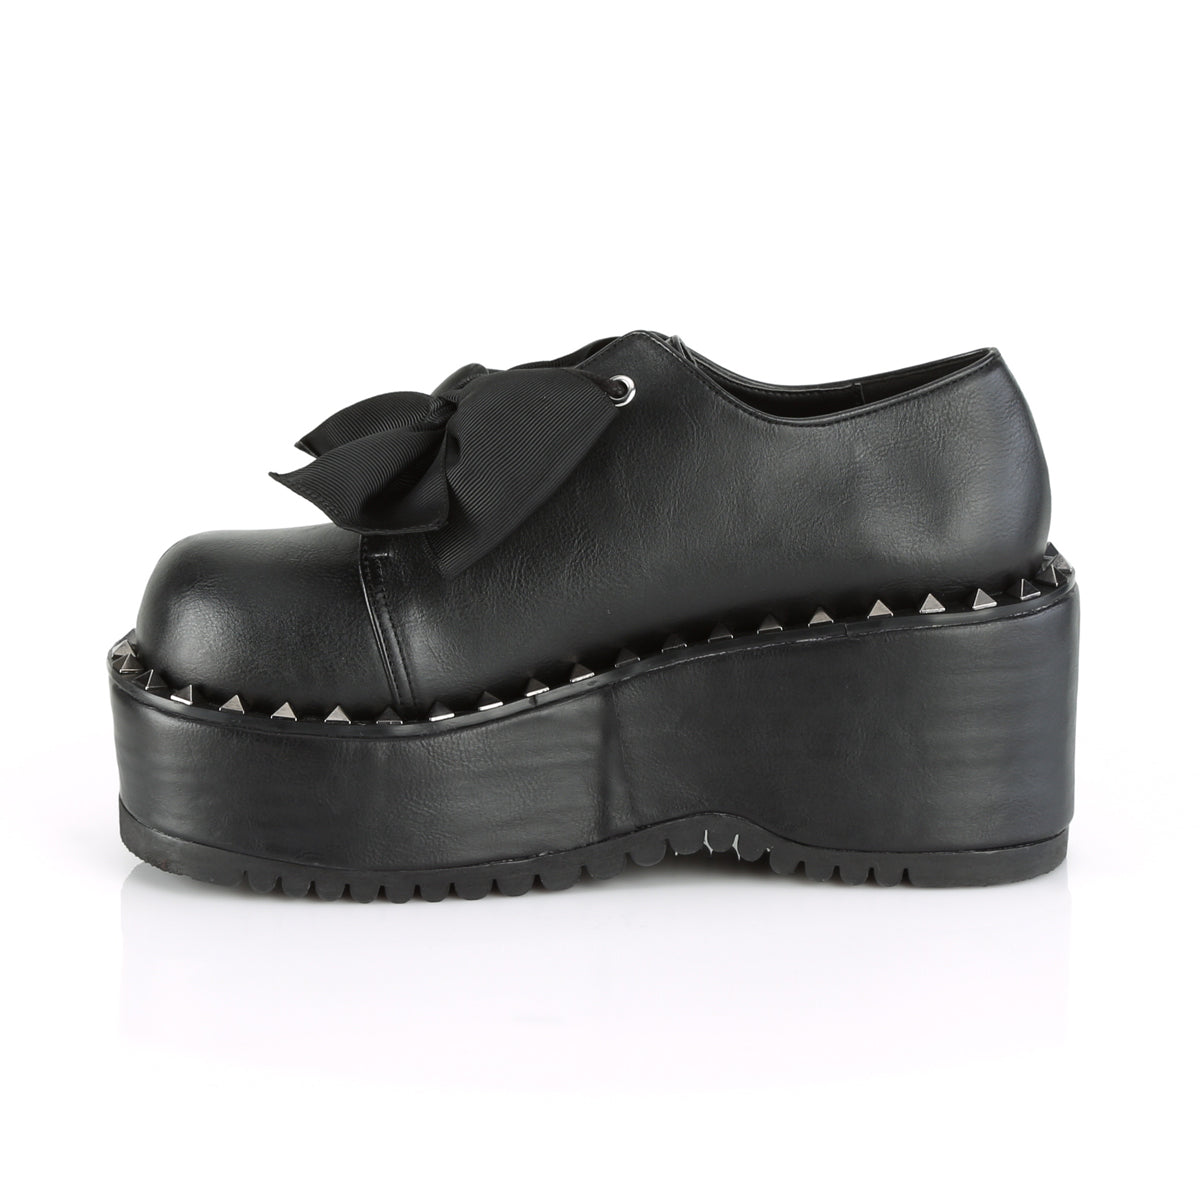 Demonia Women's Shoes DOLLY-05 Blk Vegan Leather